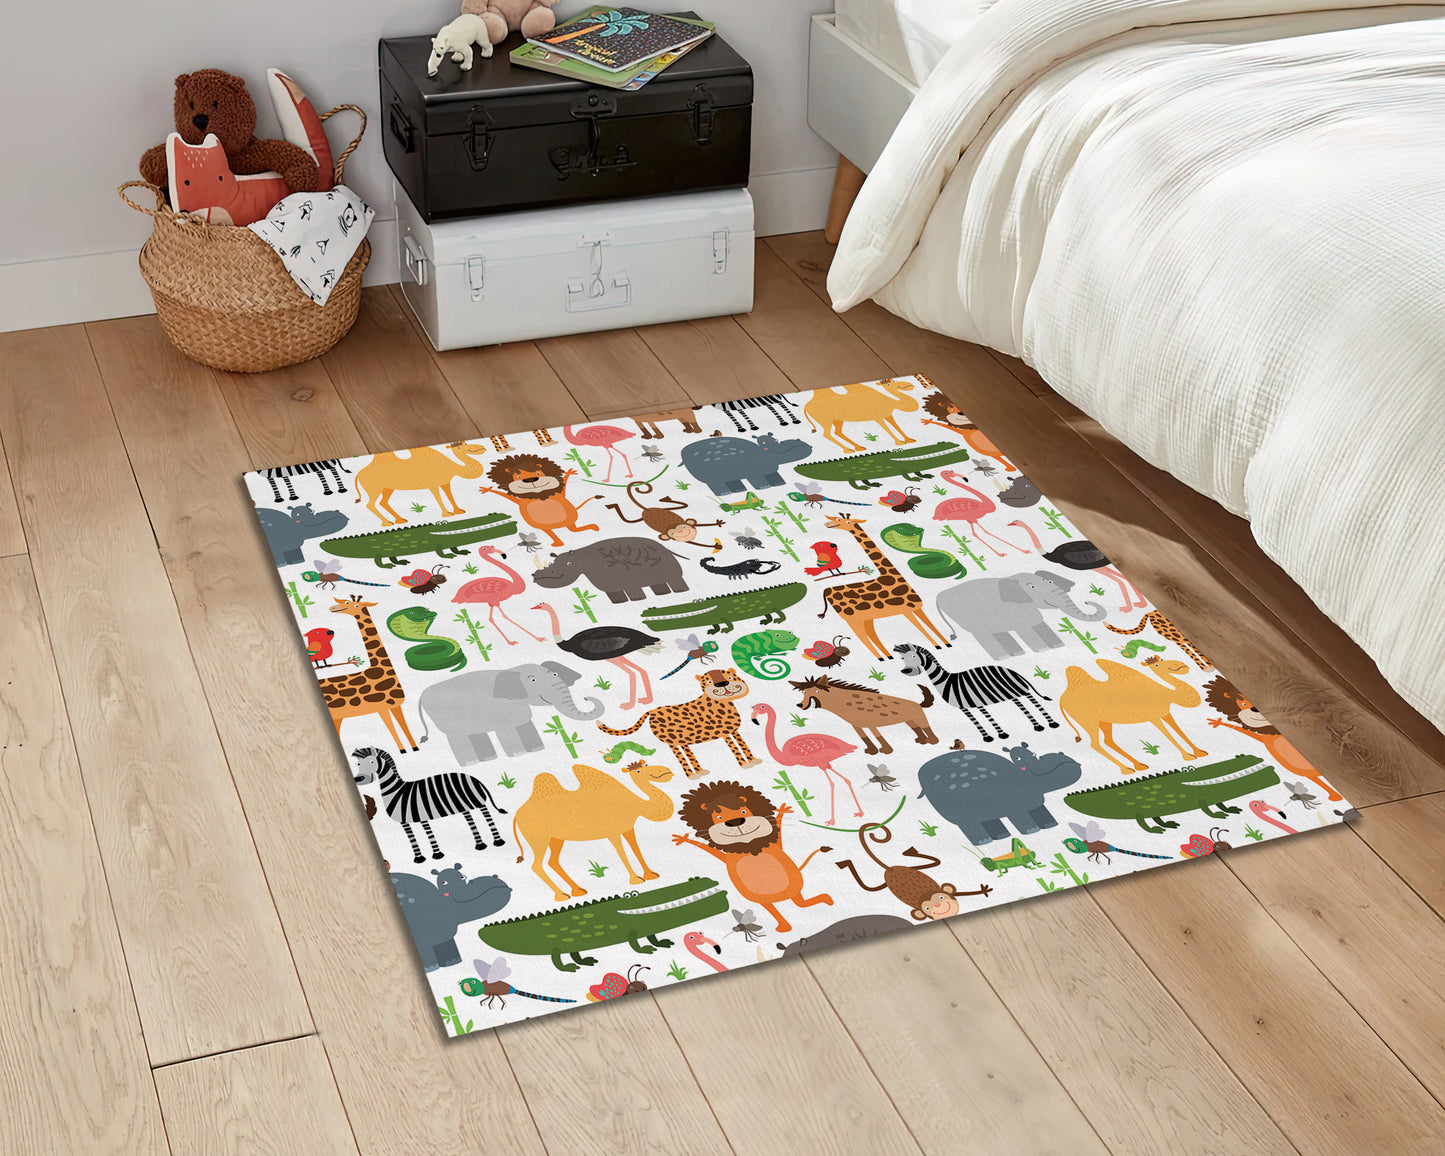 Zoo Pattern Rug, Baby Room Carpet, Nursery Play Mat, Colorful Animal Decor, Safari Rug